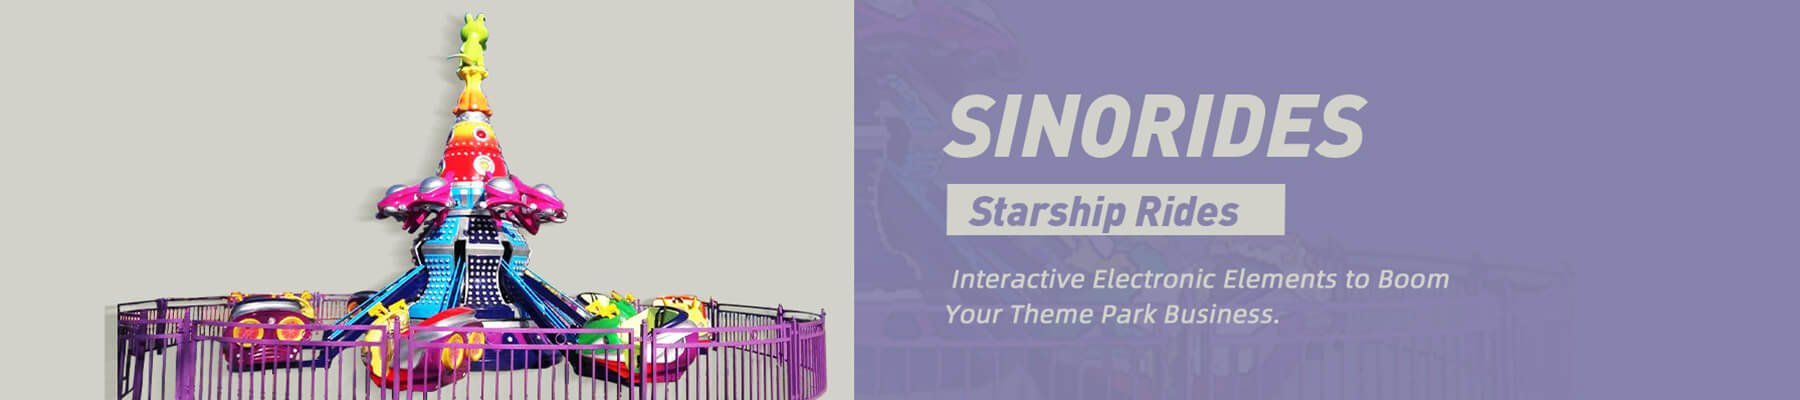 Sinorides Quality Starship Rides